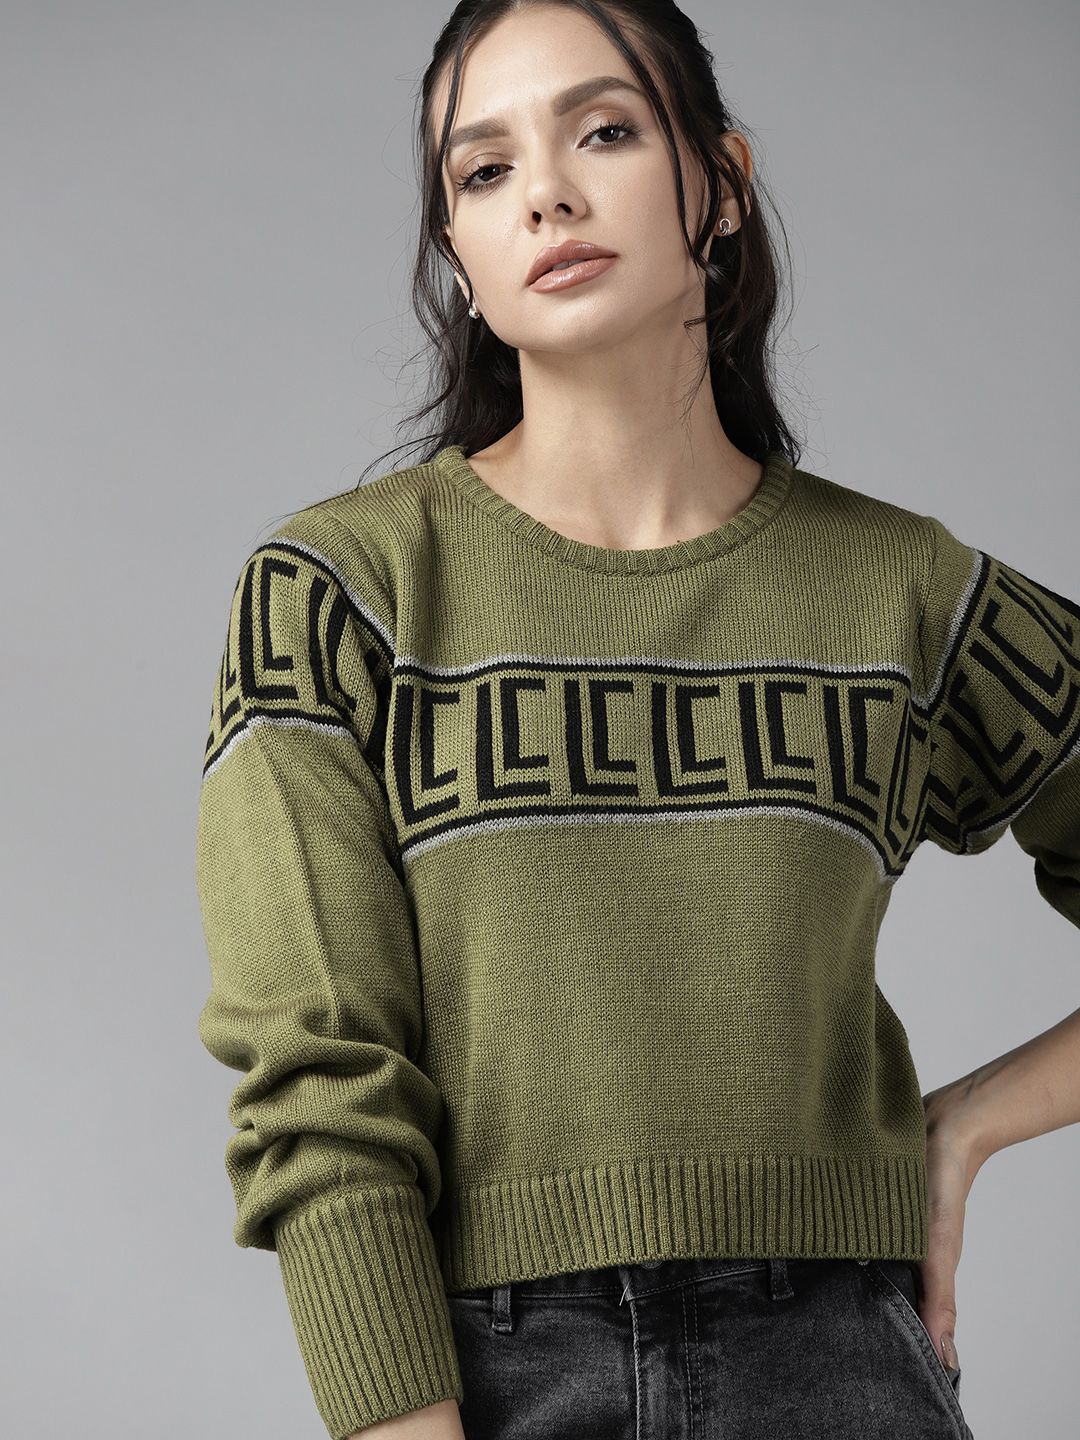 Roadster Women Olive Green & Black Geometric Self-Design Pullover Sweater Price in India